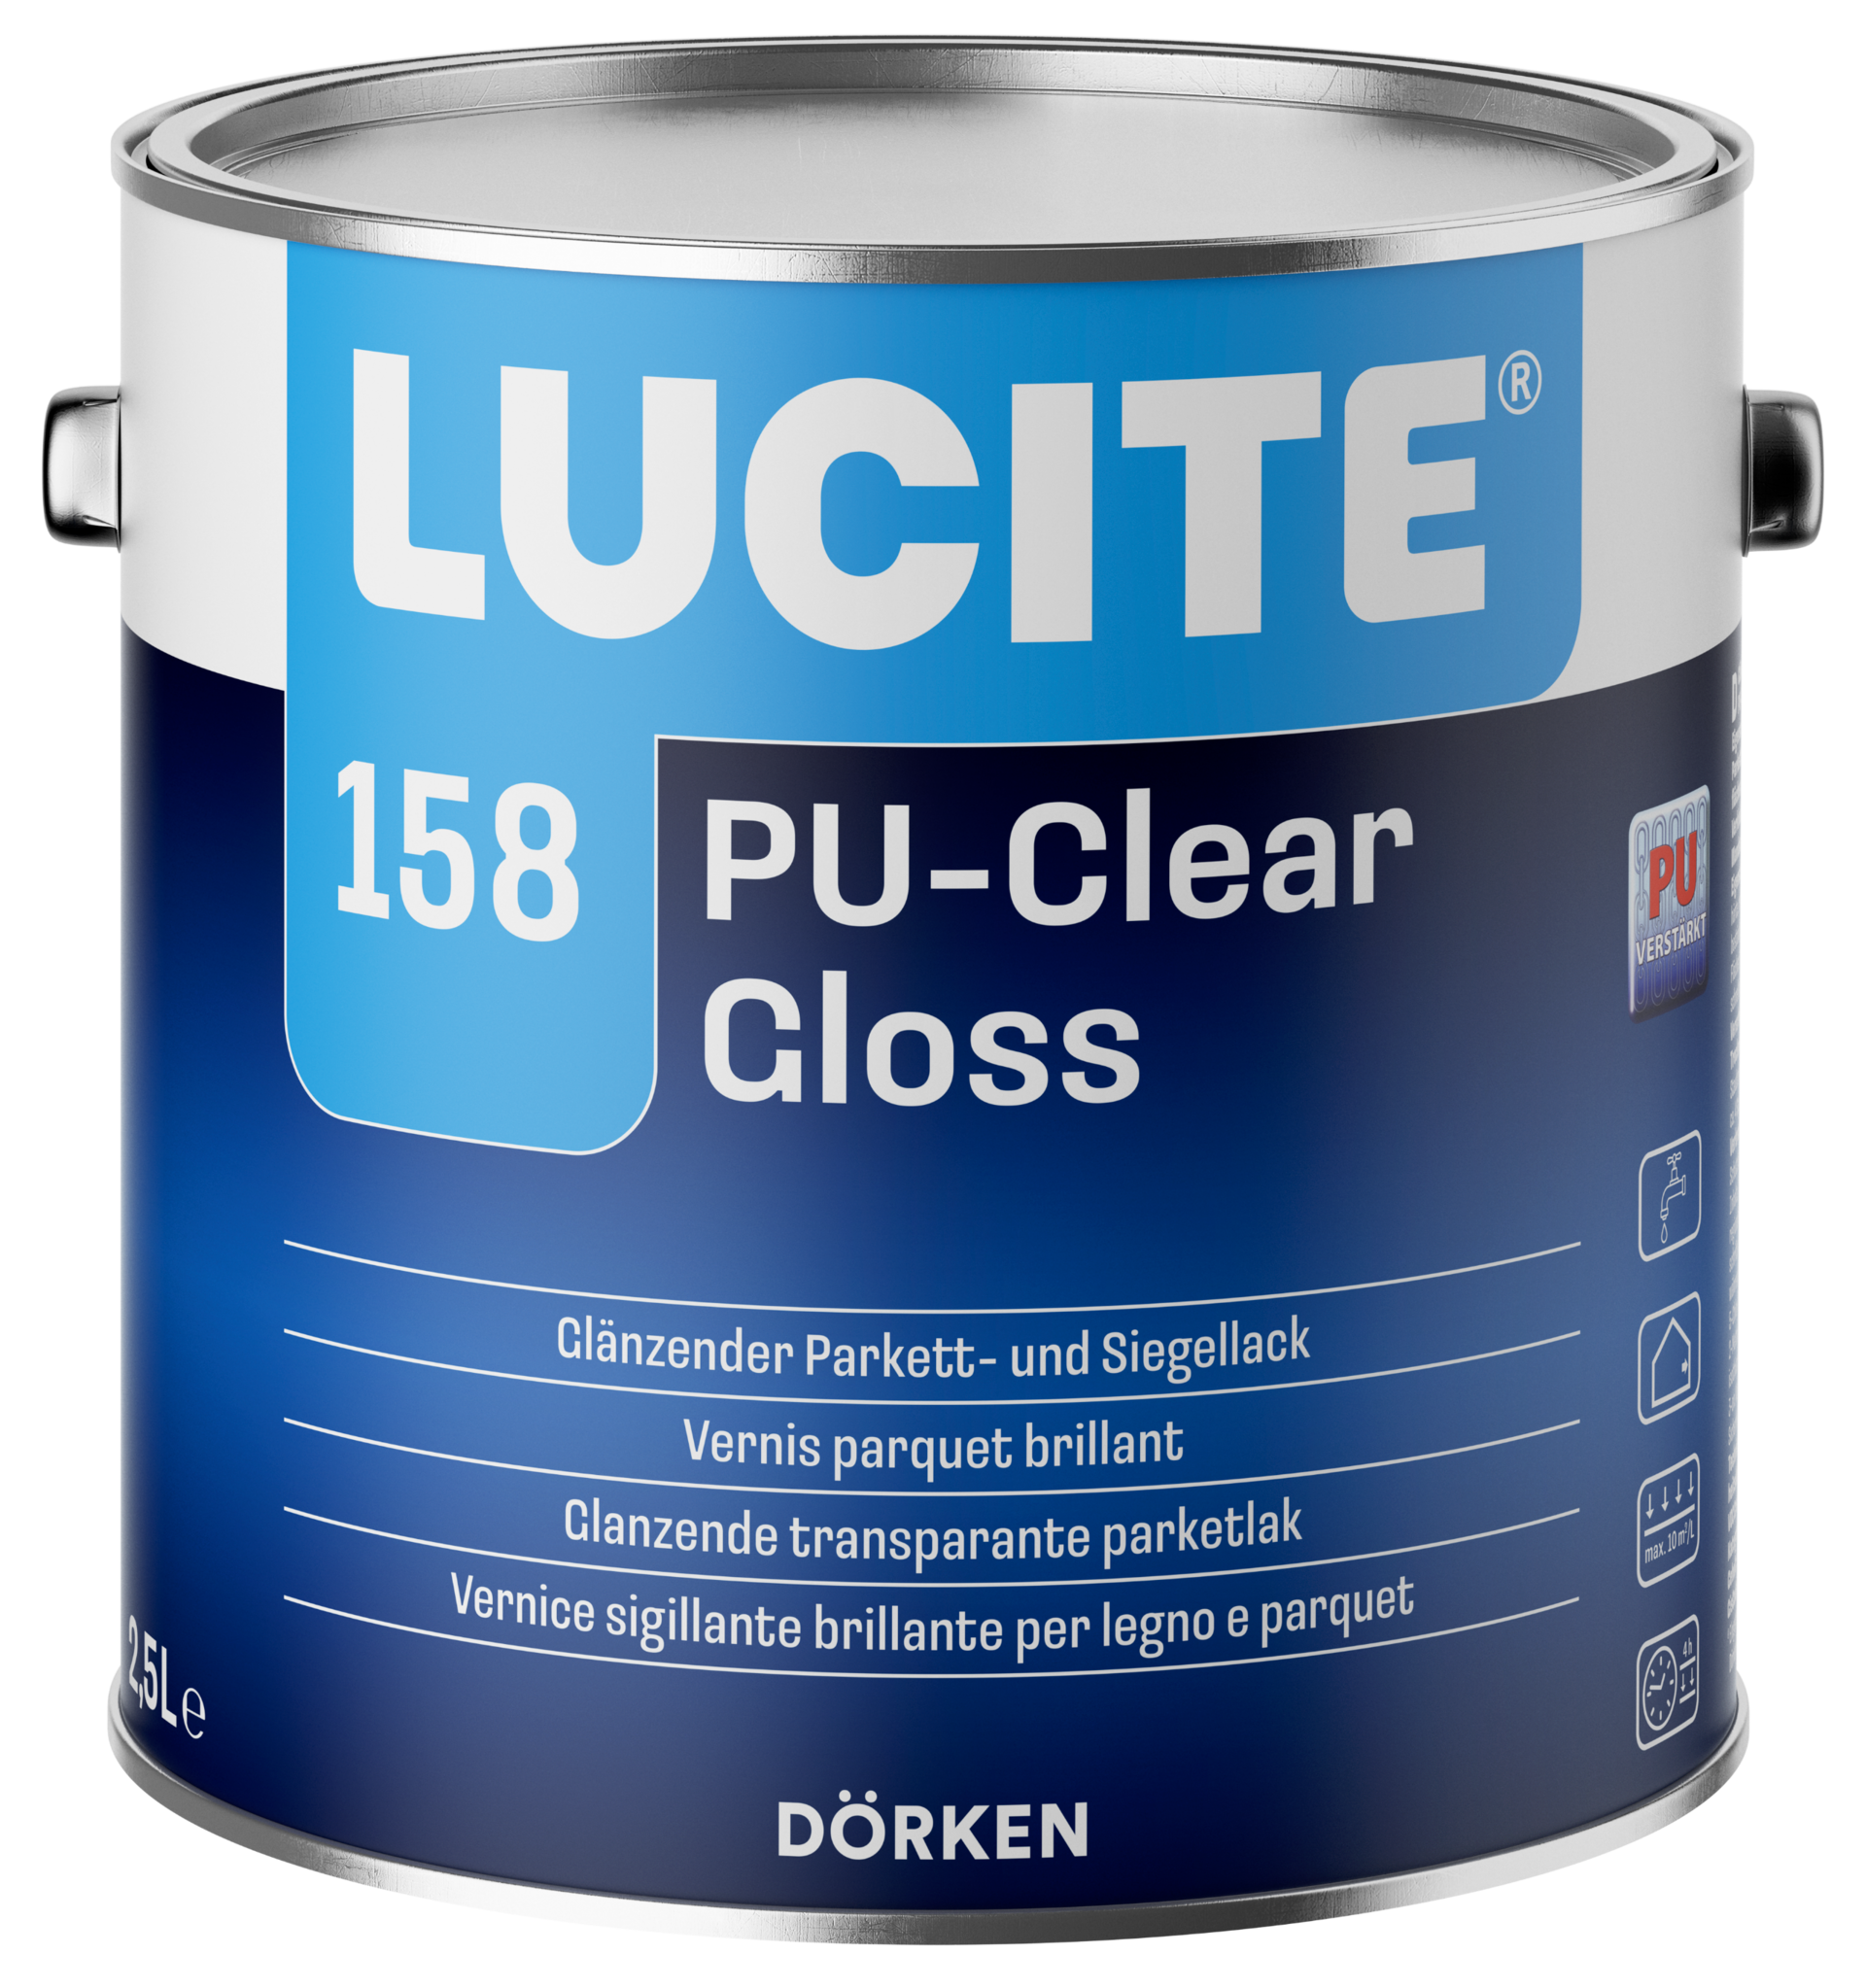 LUCITE® 158 PU-Clear Gloss